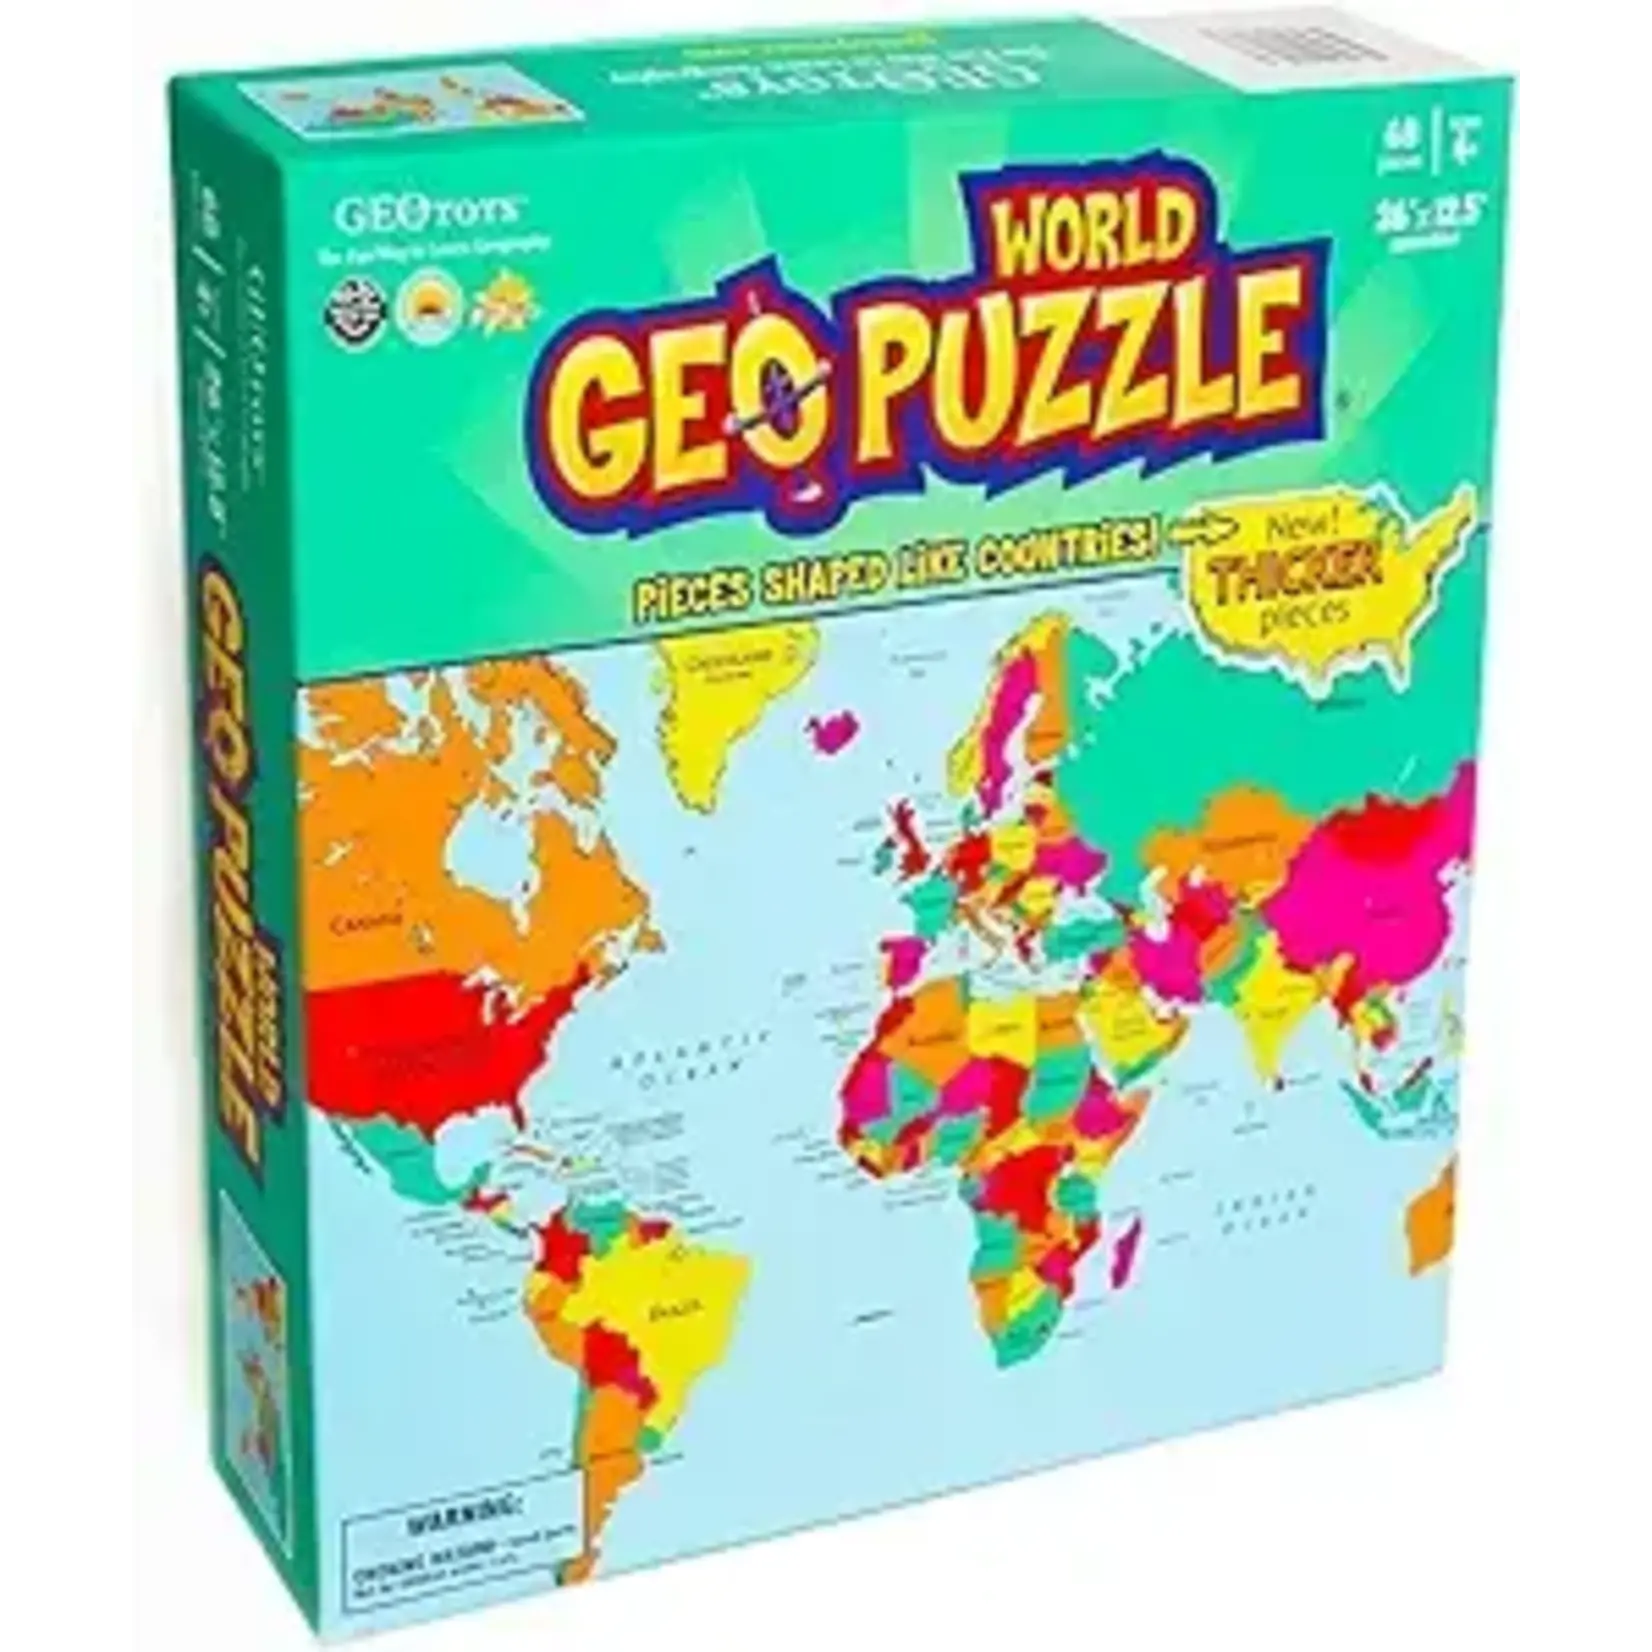 Geotoys GeoPuzzle: World, 68-Piece Floor Jigsaw Puzzle